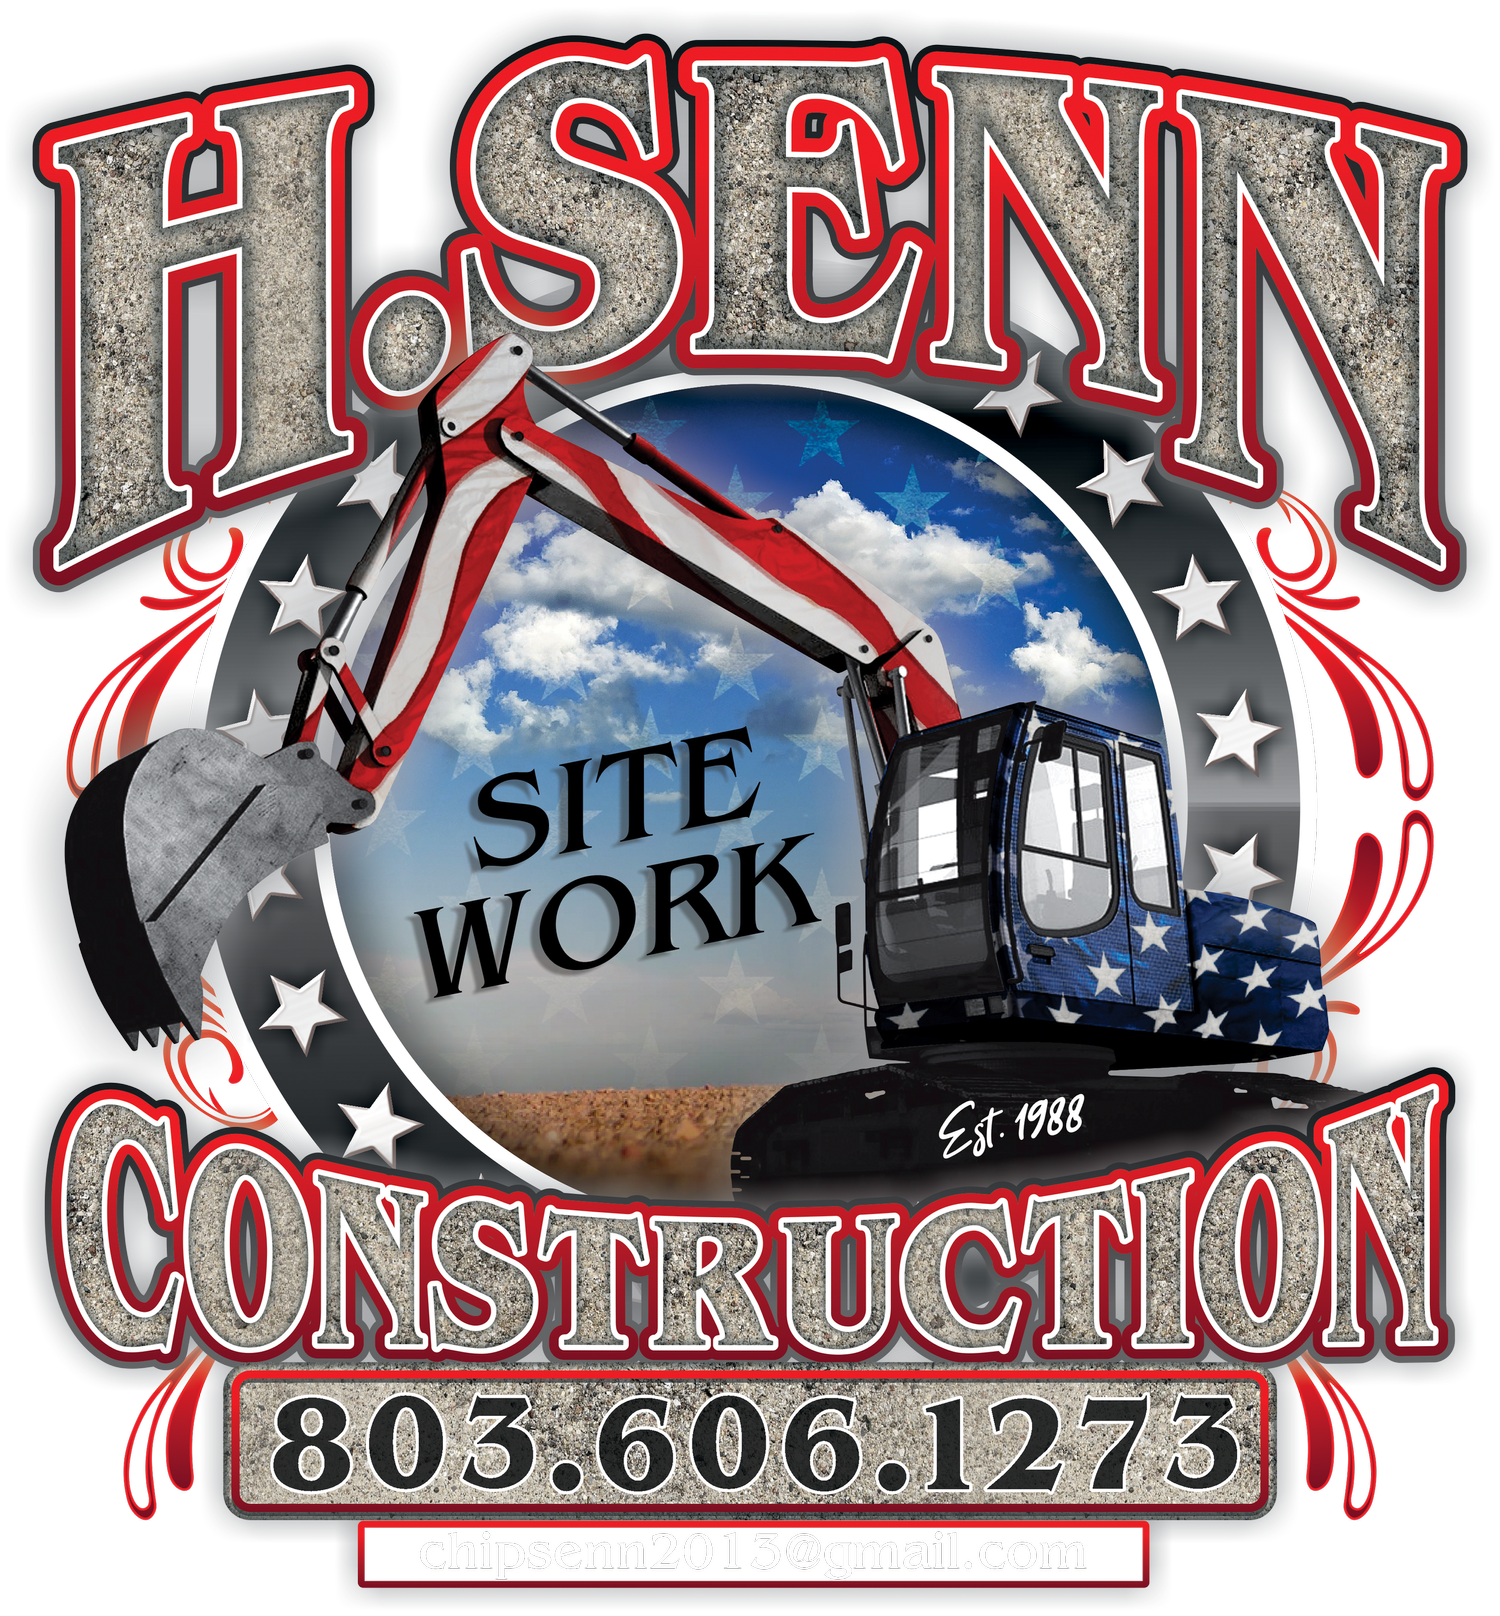 H. Senn Construction LLC